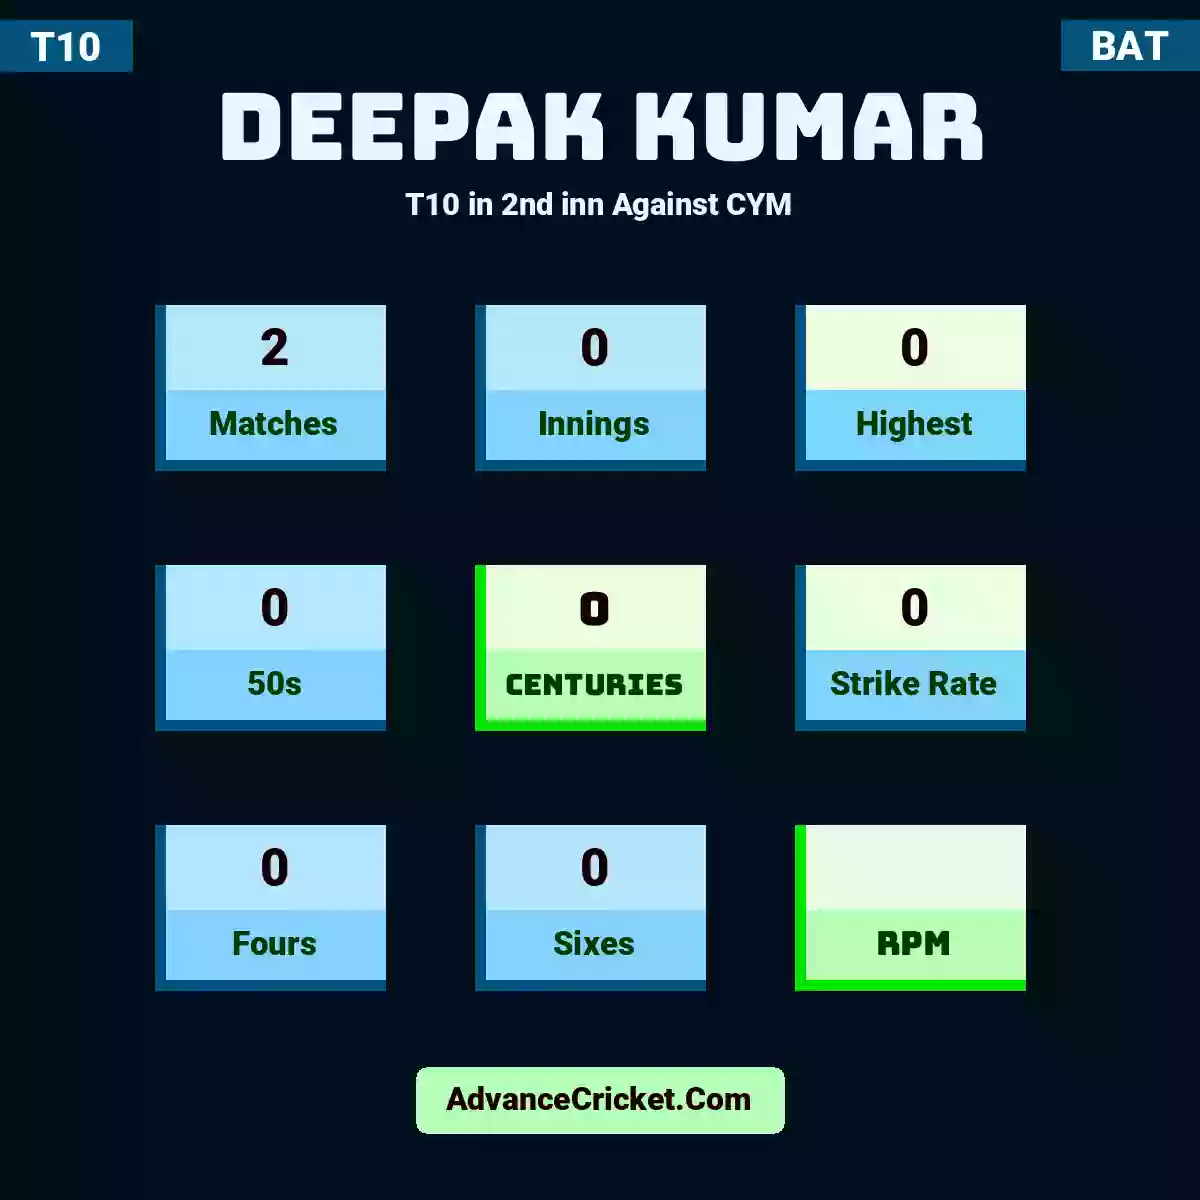 Deepak Kumar T10  in 2nd inn Against CYM, Deepak Kumar played 2 matches, scored 0 runs as highest, 0 half-centuries, and 0 centuries, with a strike rate of 0. D.Kumar hit 0 fours and 0 sixes.